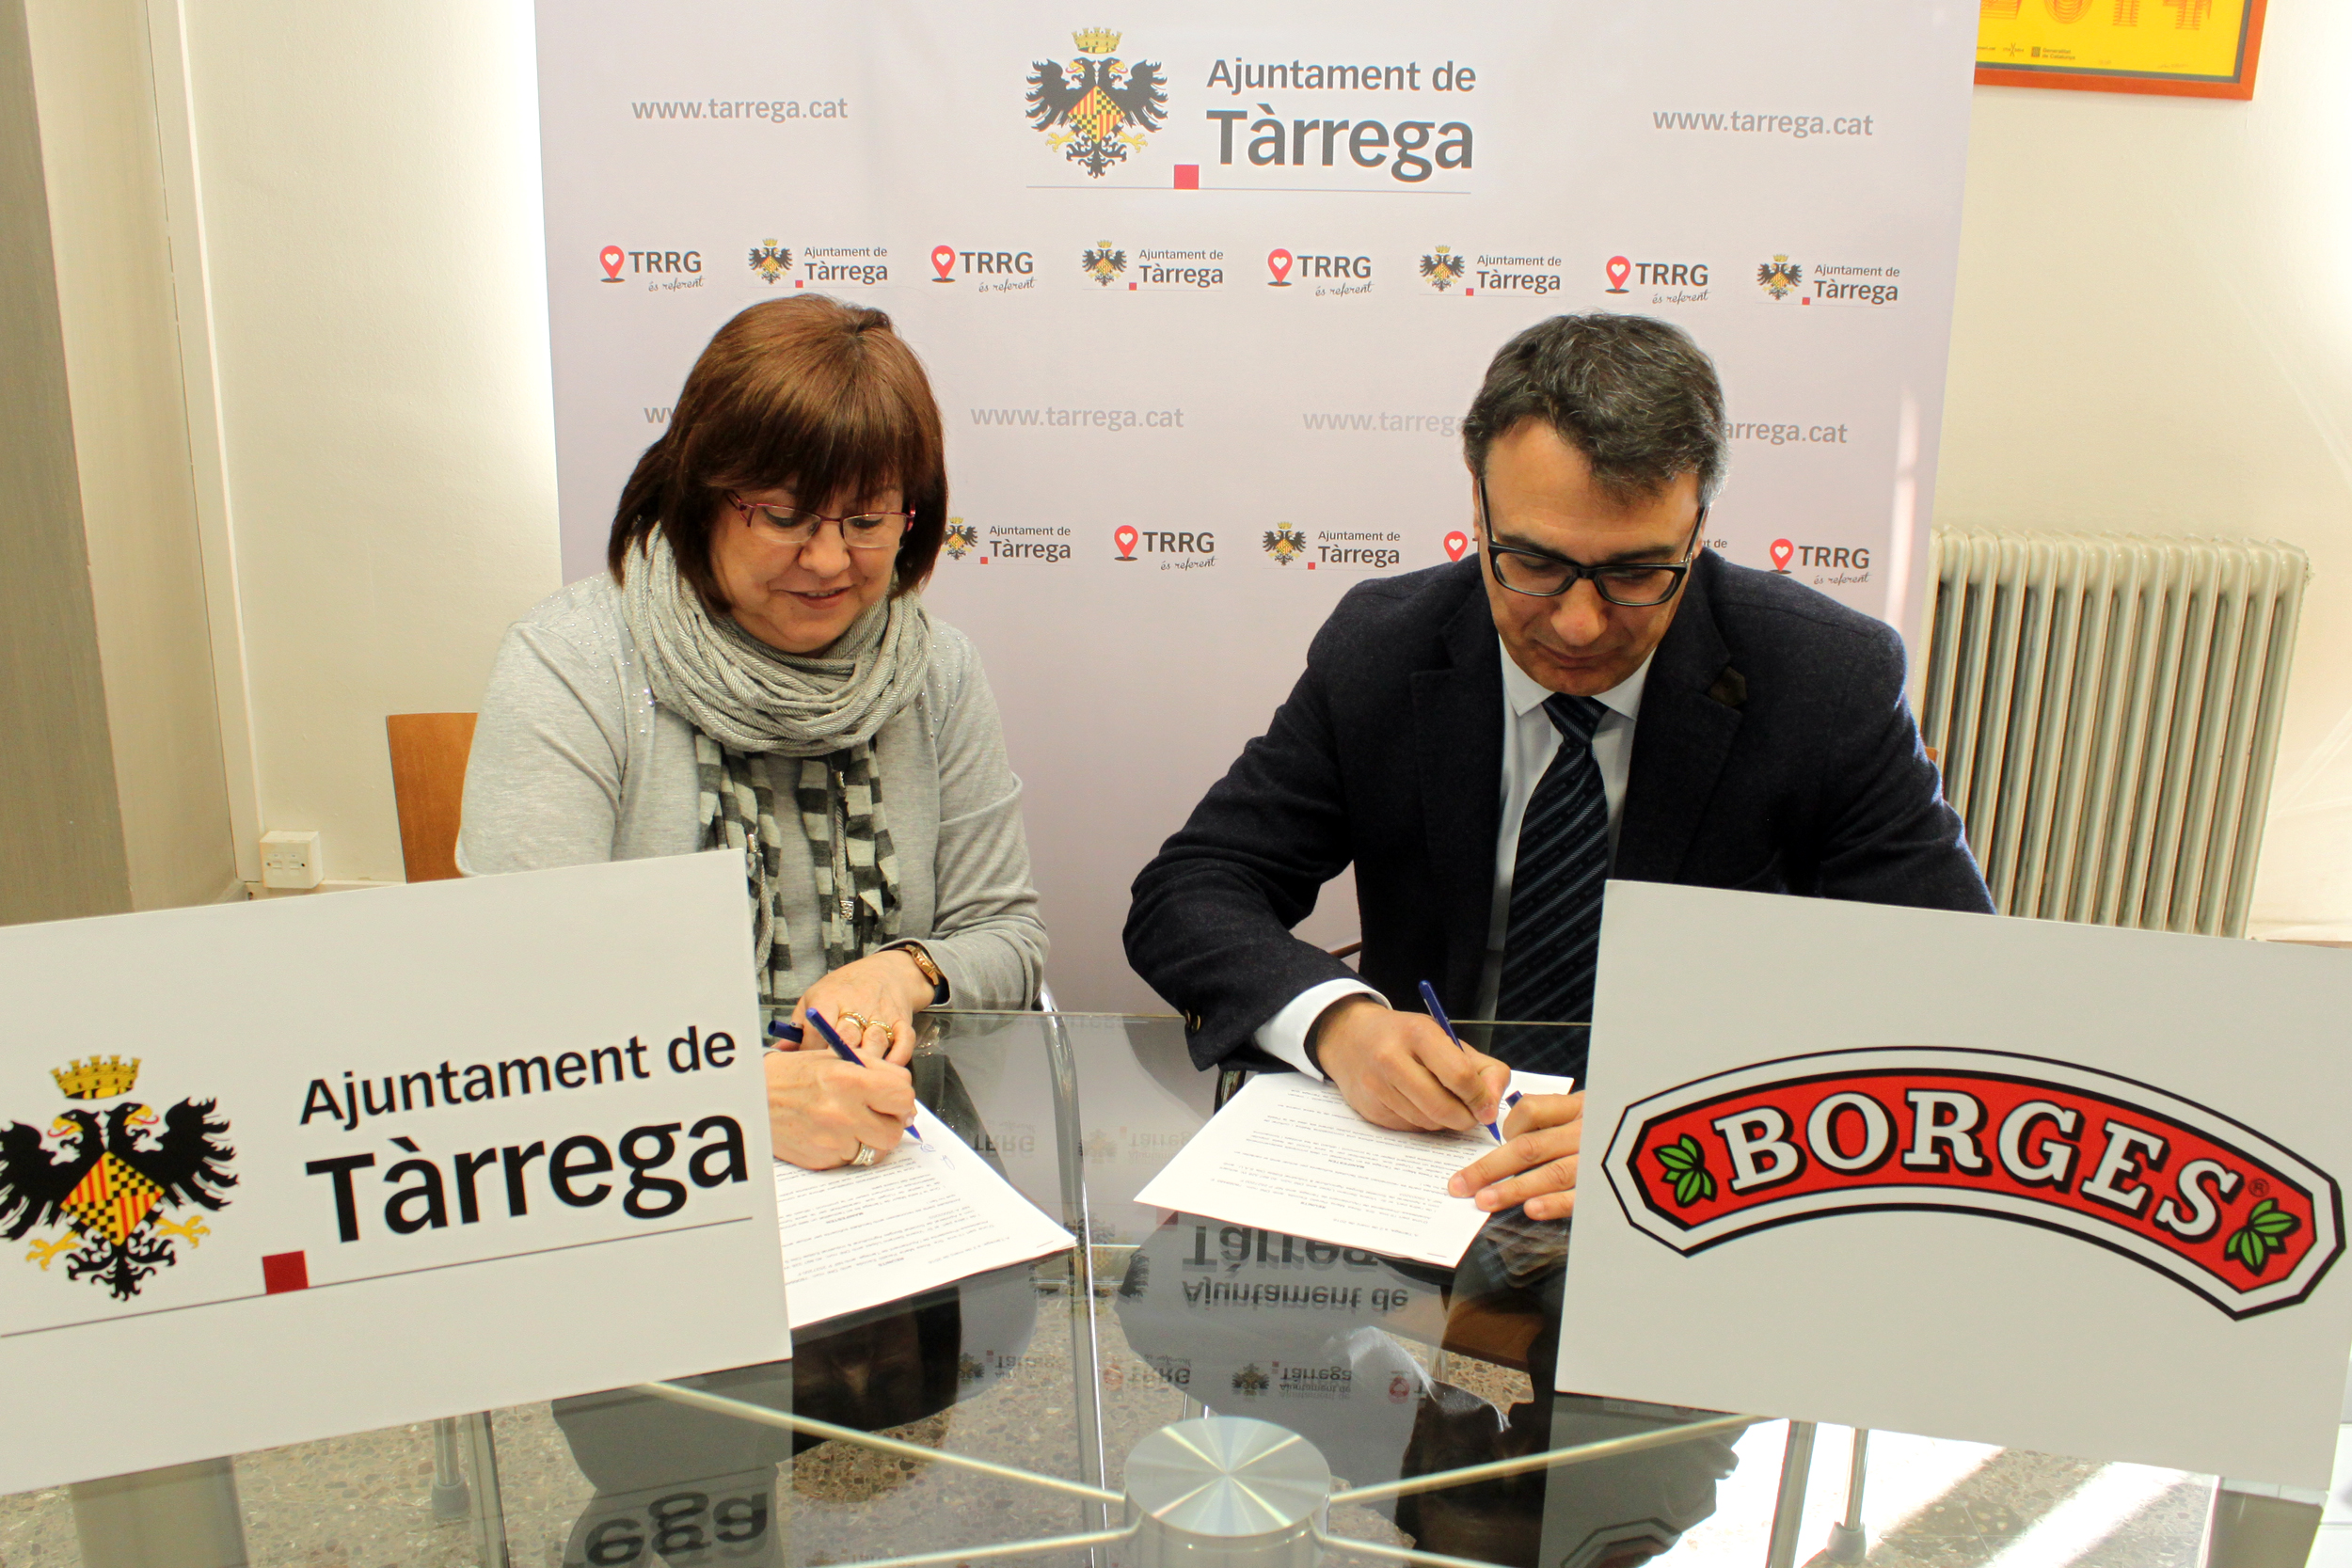 La marca Borges, patrocinador oficial de la Festa Major de Maig de Tàrrega